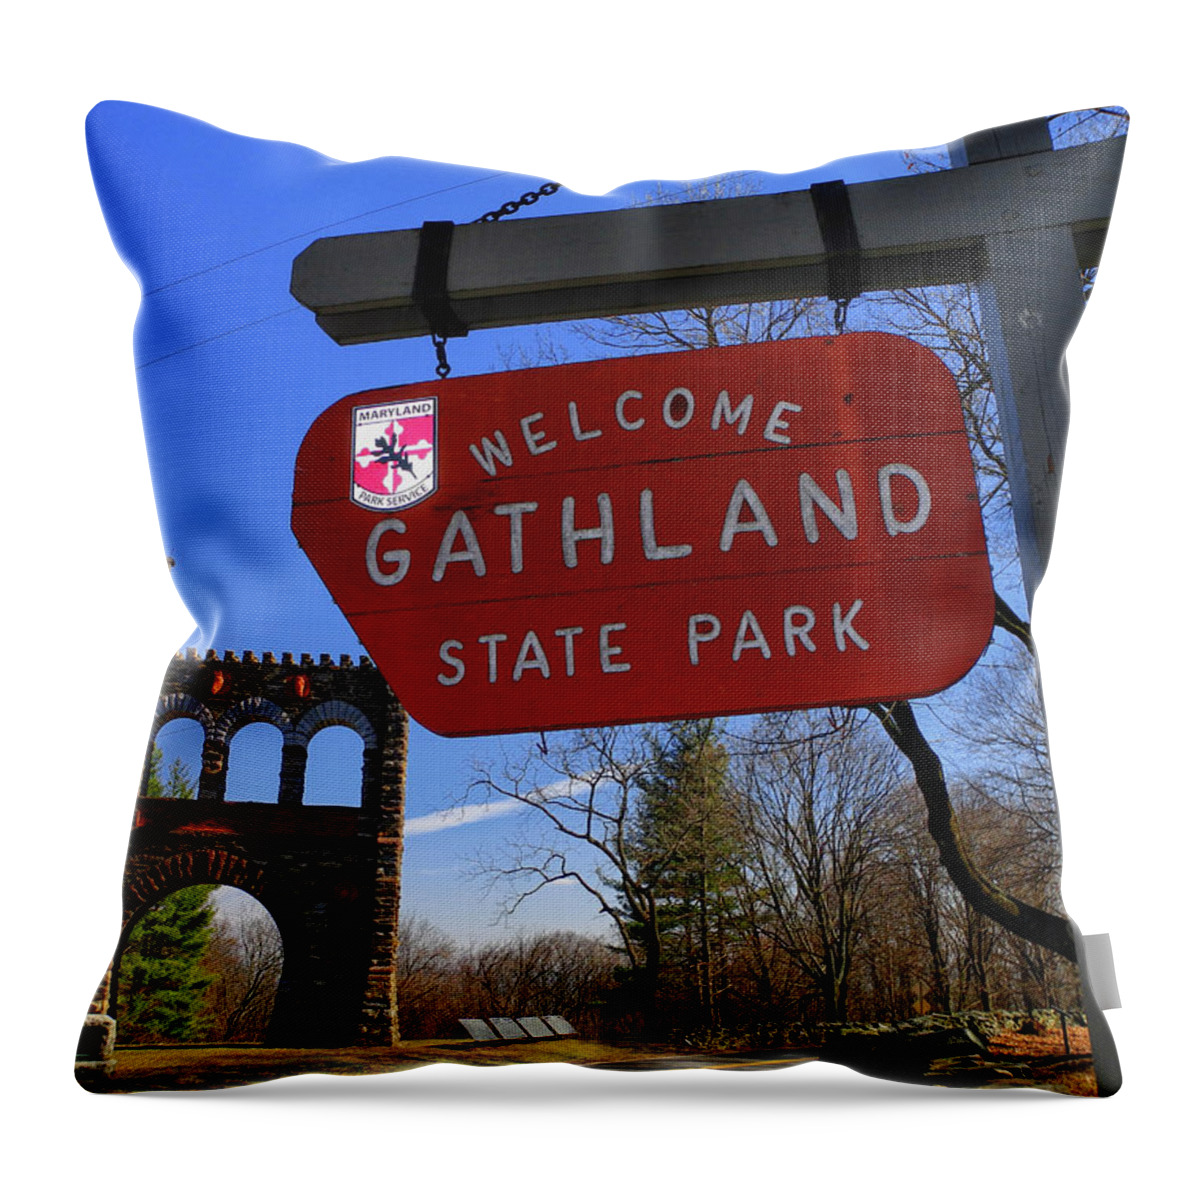 Gathland State Park Throw Pillow featuring the photograph Gathland State Park in Maryland by Raymond Salani III